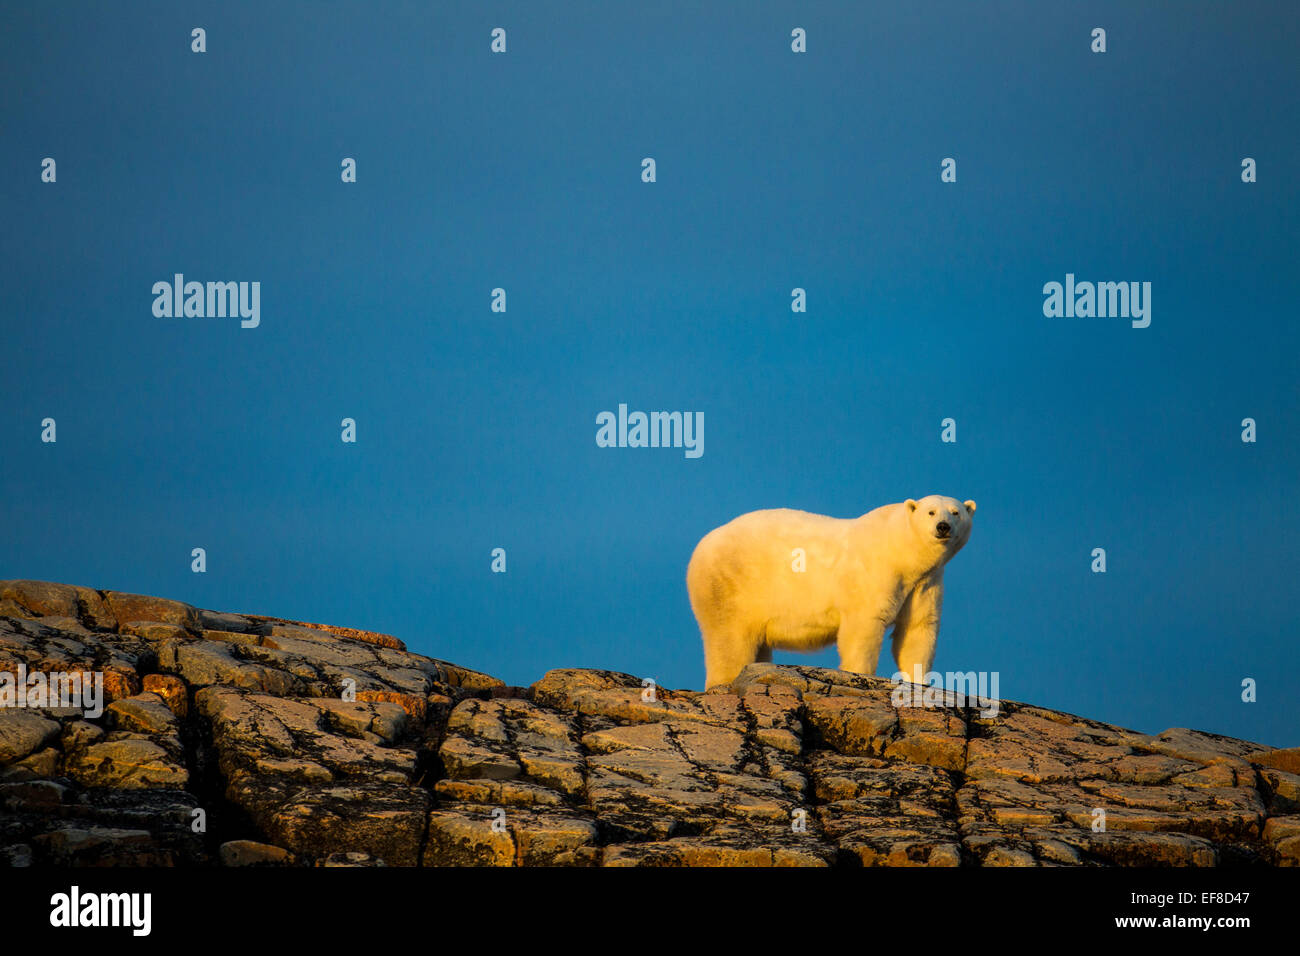 Canada, Nunavut Territory, Repulse Bay, Adult Male Polar Bear (Ursus maritimus) standing in summer sunshine on rocky outcrop ato Stock Photo